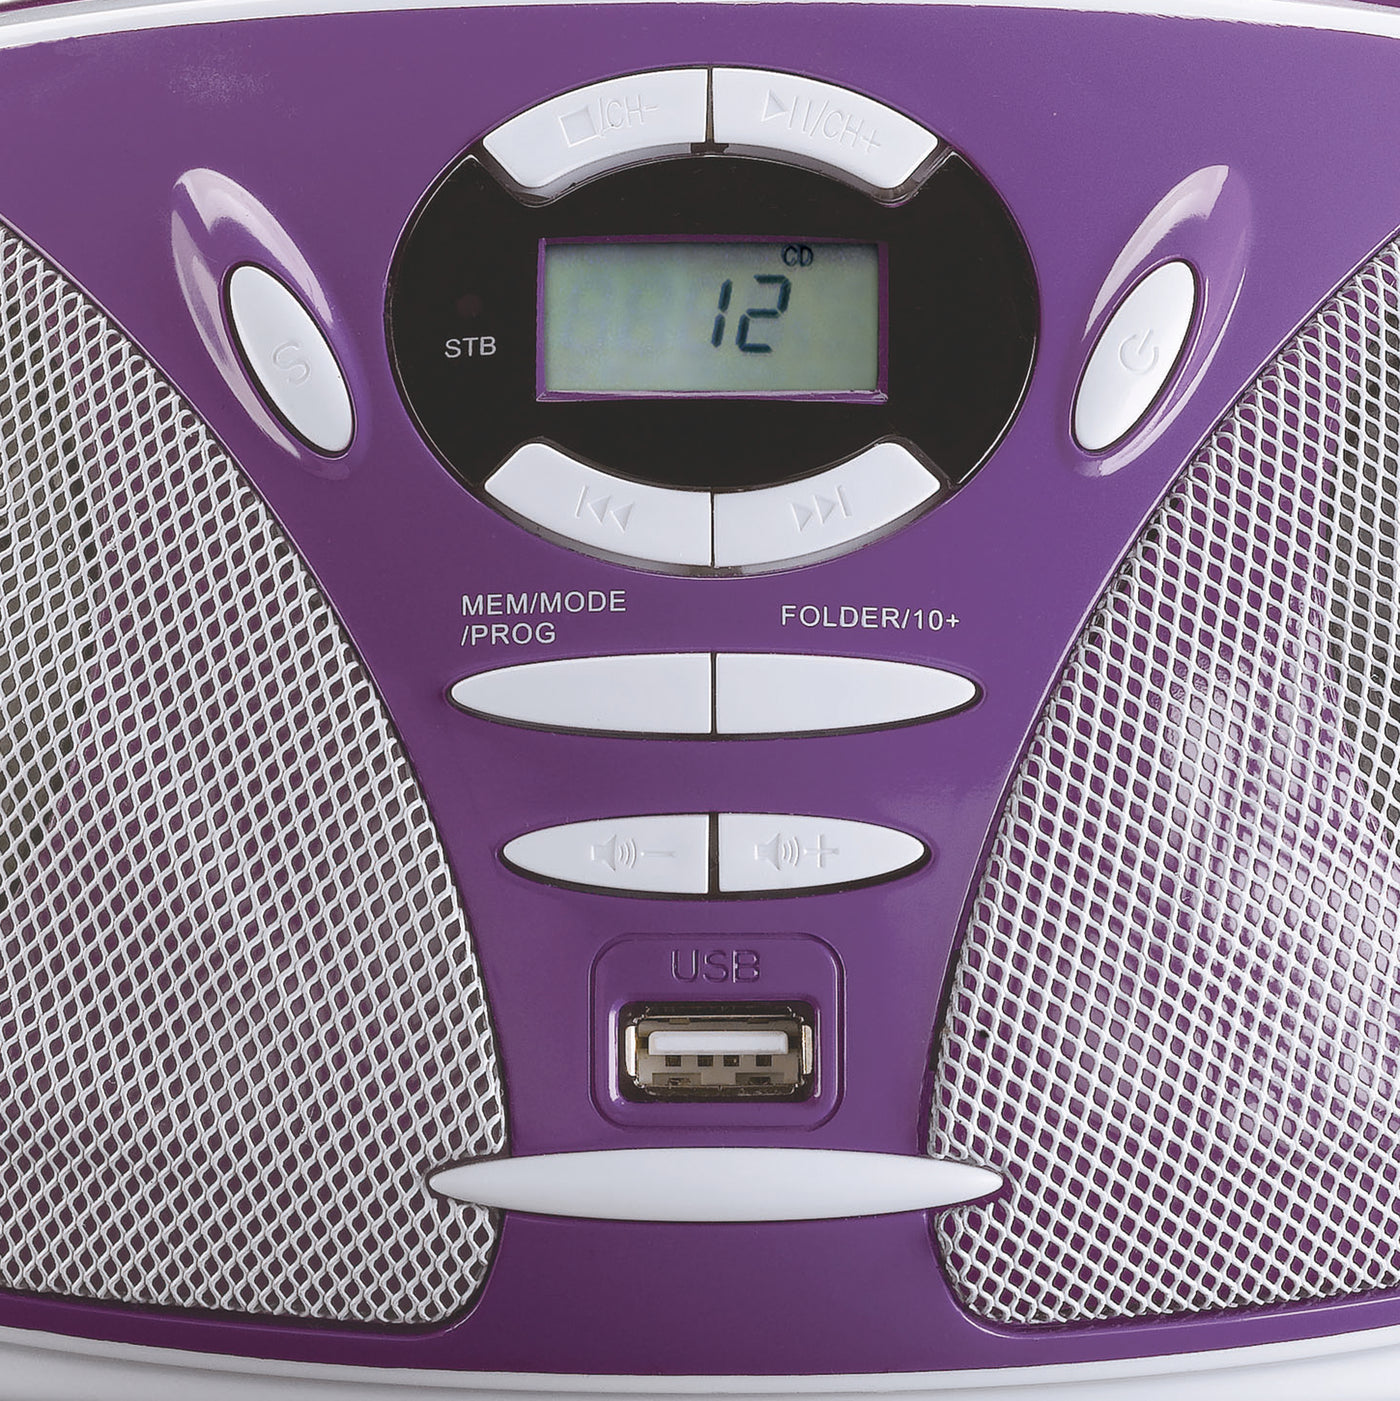 LENCO SCD-300PU - Portable Radio - MP3 CD - USB - Purple